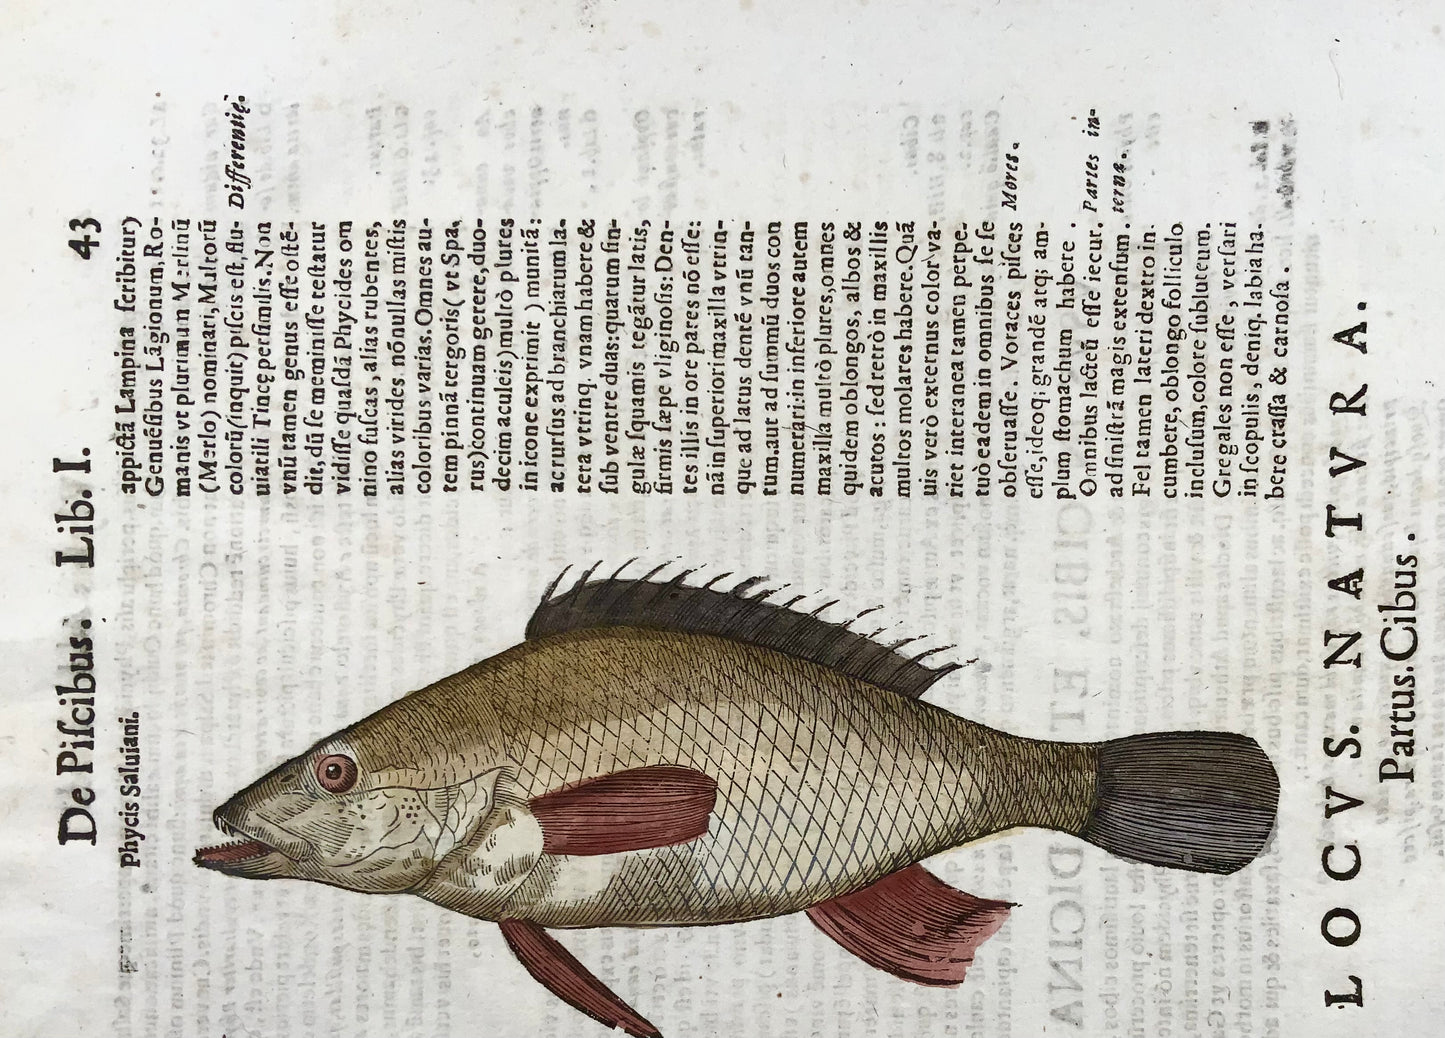 1638 Phylis Salviani, Forkbeard fish, Aldrovandi, large folio woodcut leaf